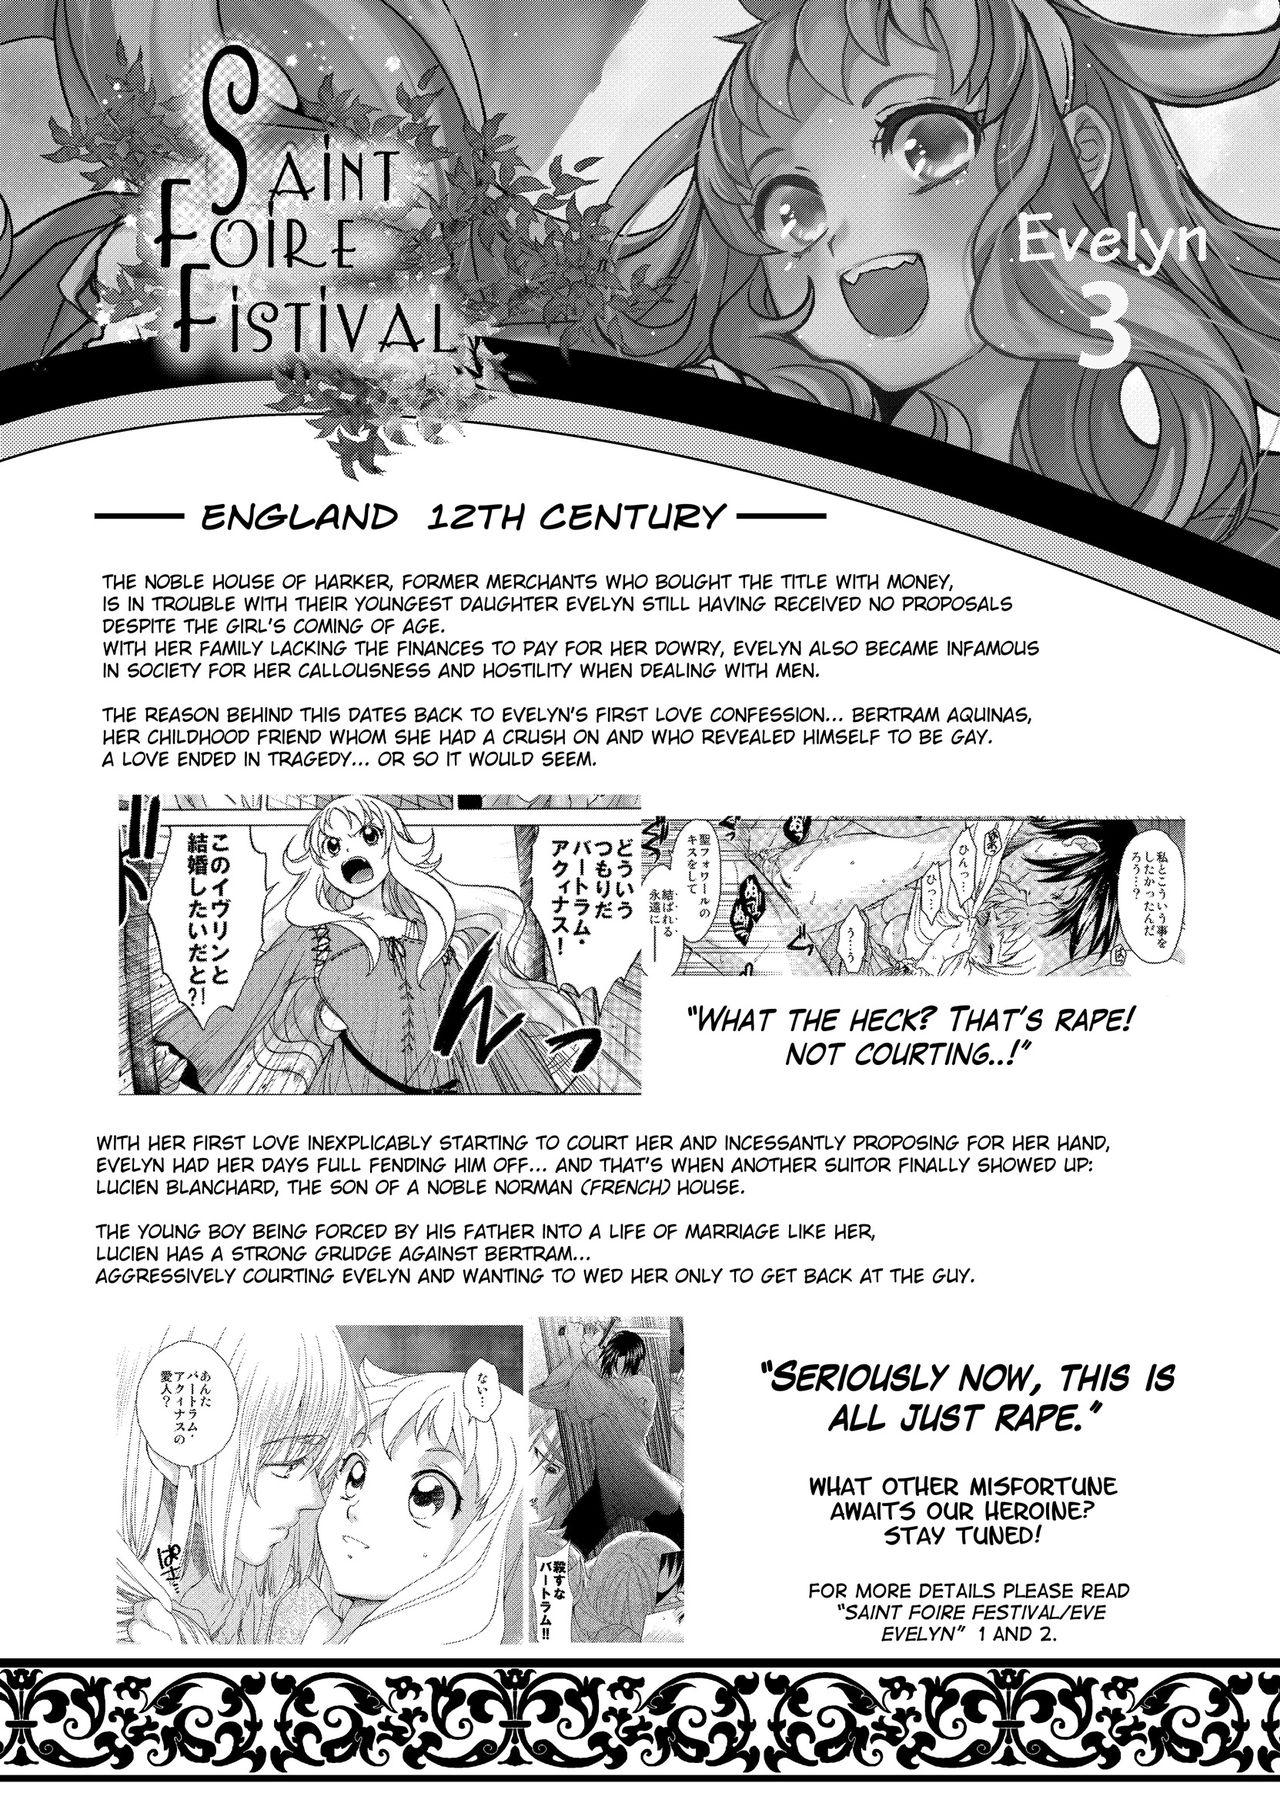 Gemidos Saint Foire Festival/eve Evelyn:3 - Original Clitoris - Page 4